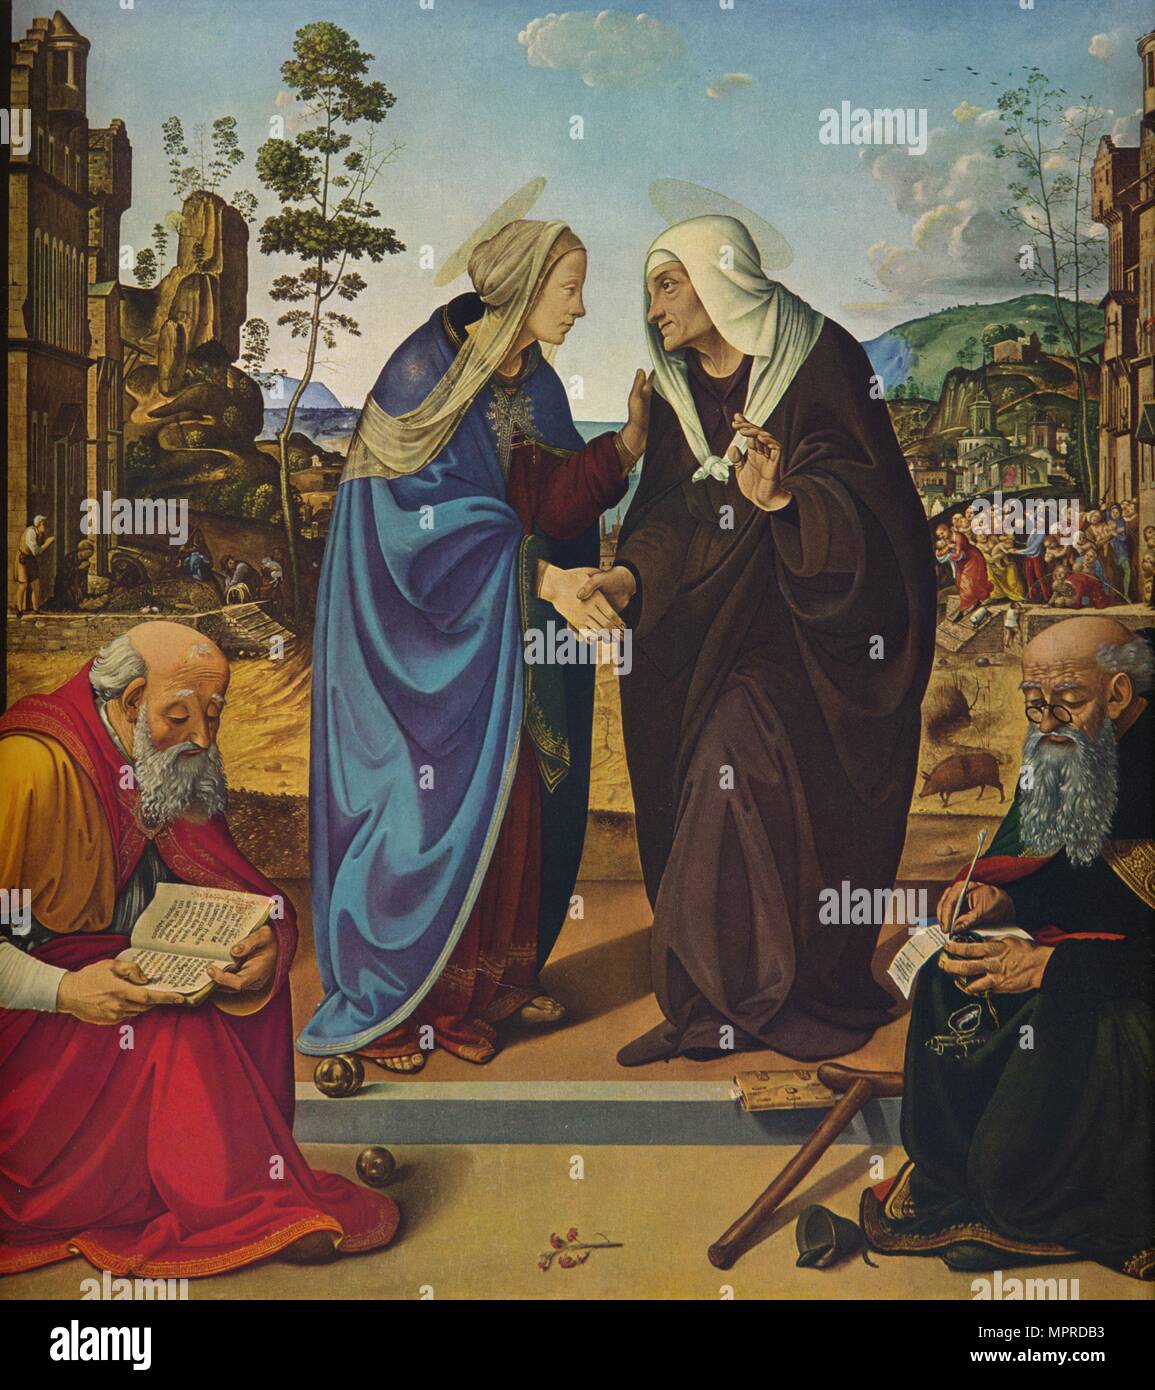 'The Visitation with Saints Nicholas and Anthony Abbot', c1489-1490. Artist: Piero di Cosimo. Stock Photo